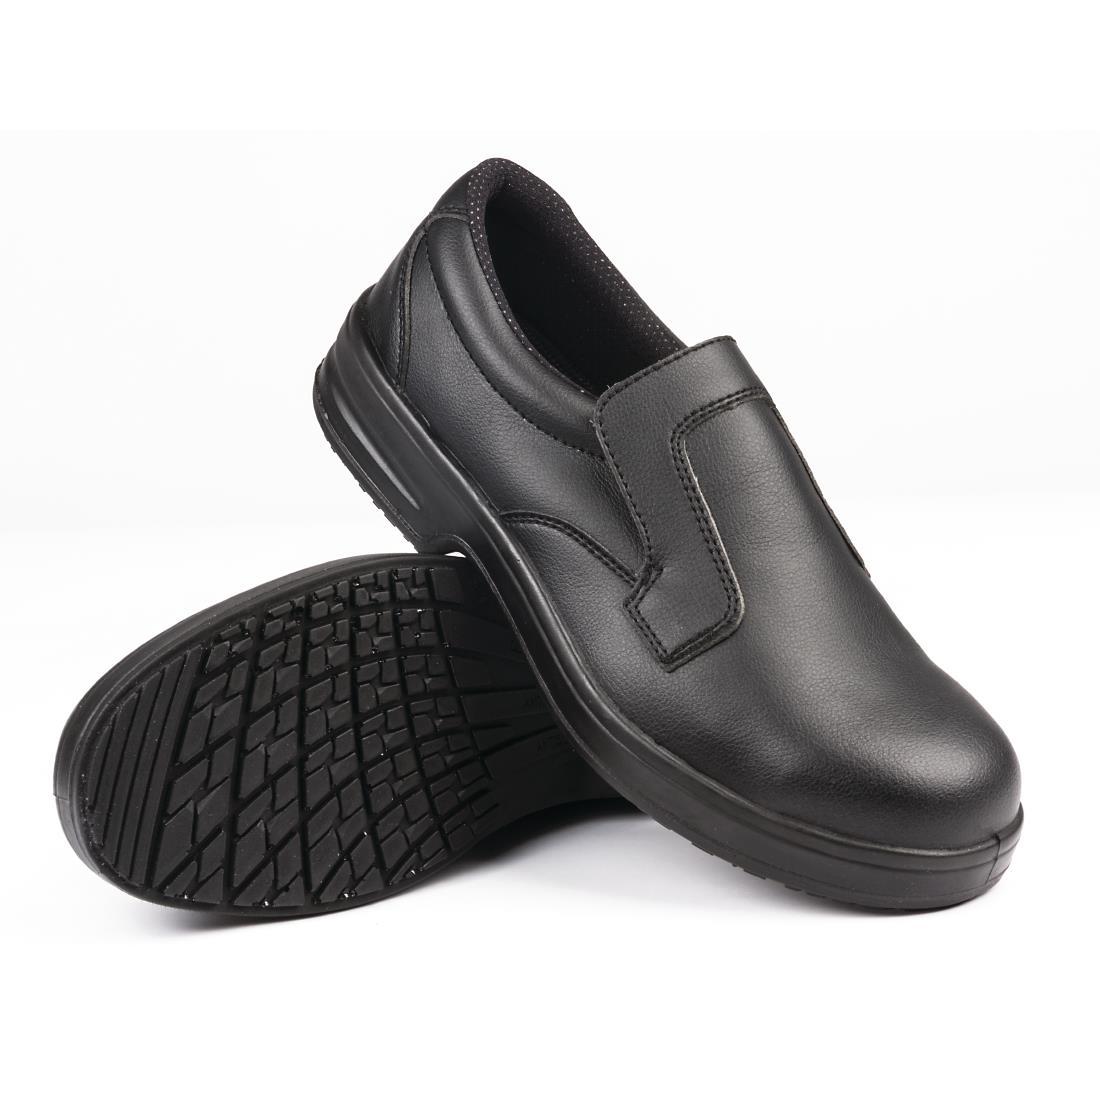 Slipbuster Lite Slip On Safety Shoes Black 41 - A845-41  - 3